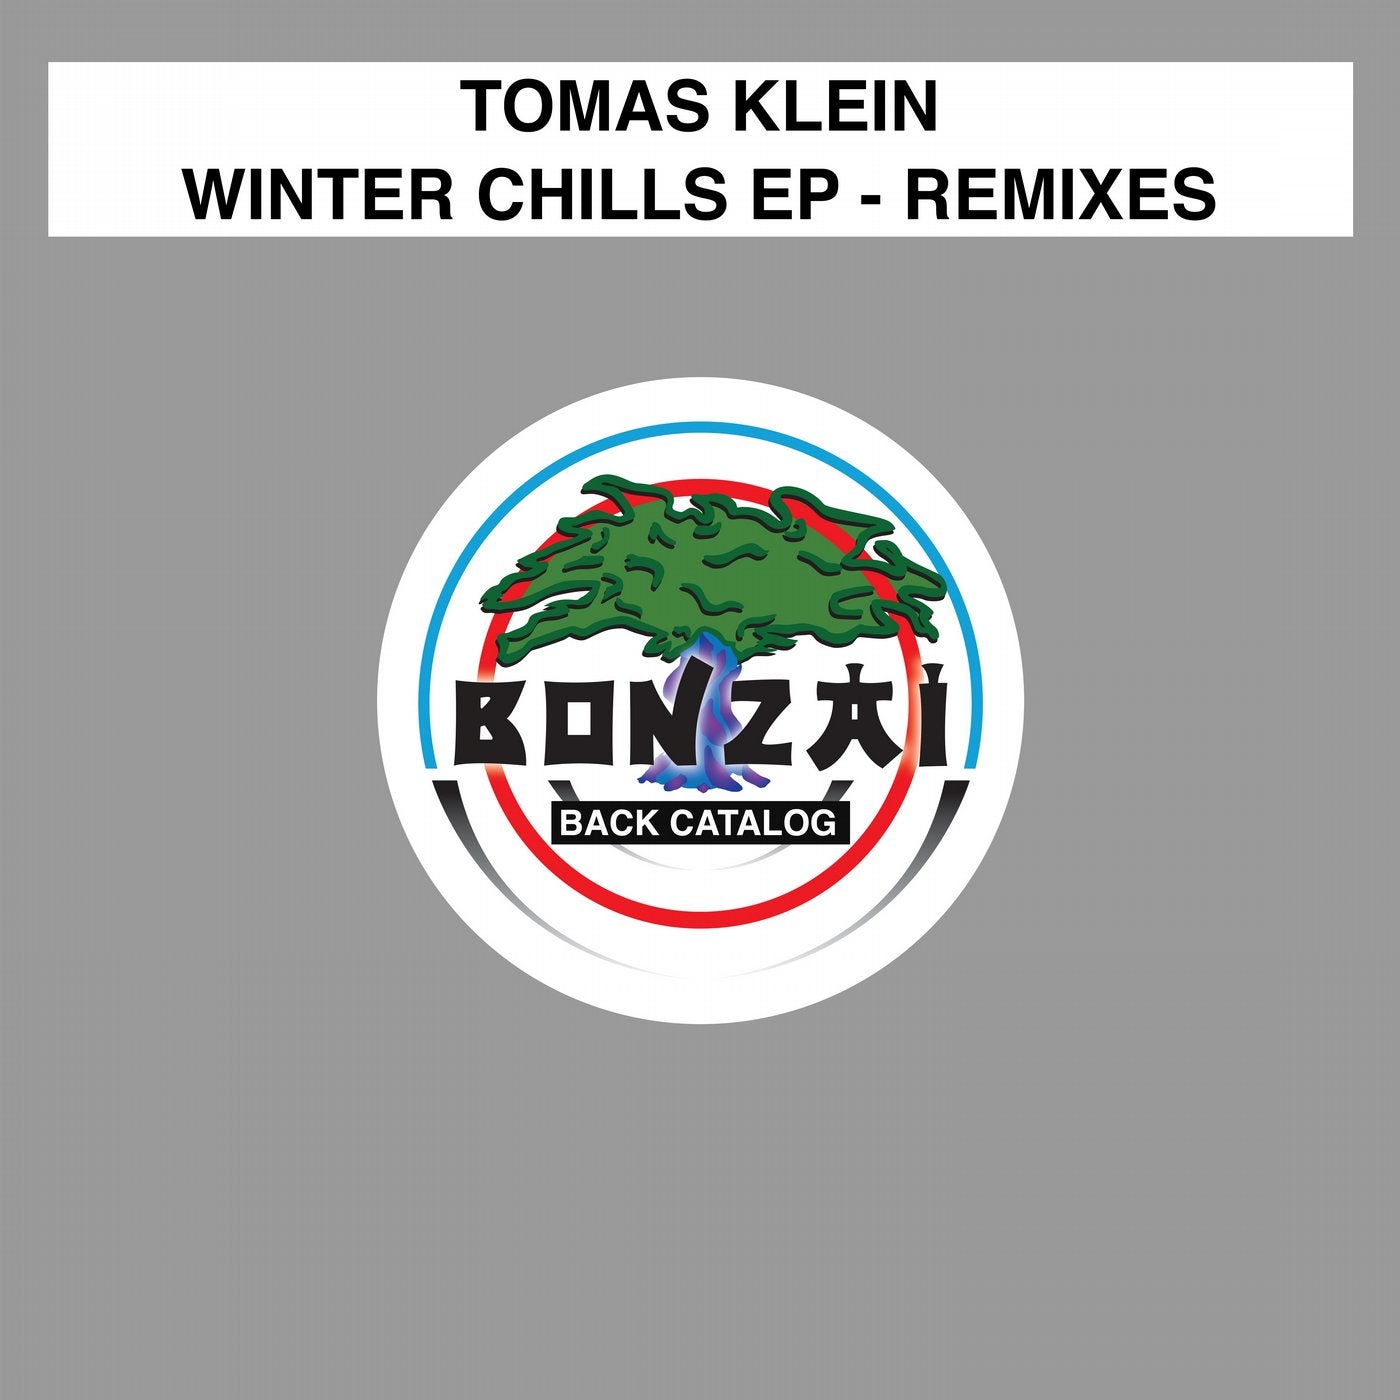 Winter Chills EP - Remixes